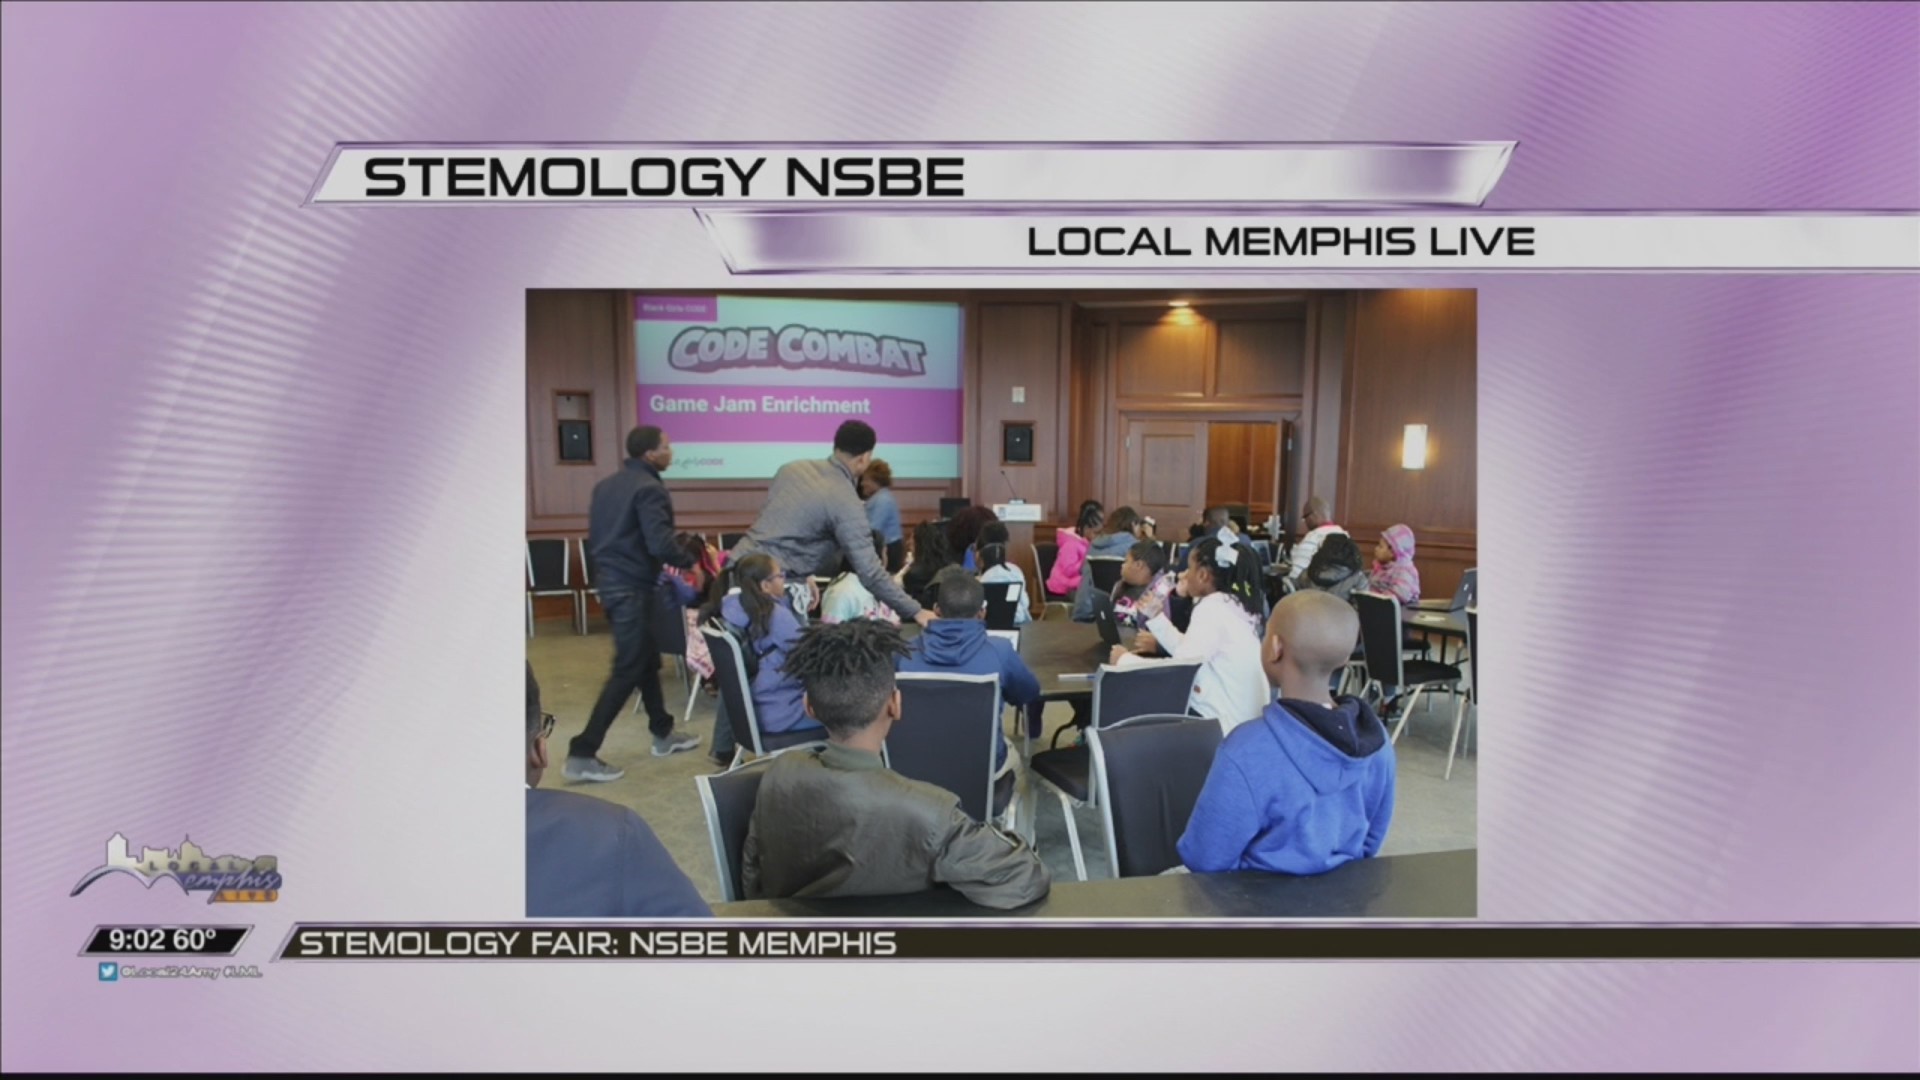 NSBE PRESENTS: STEMOLOGY FAIR